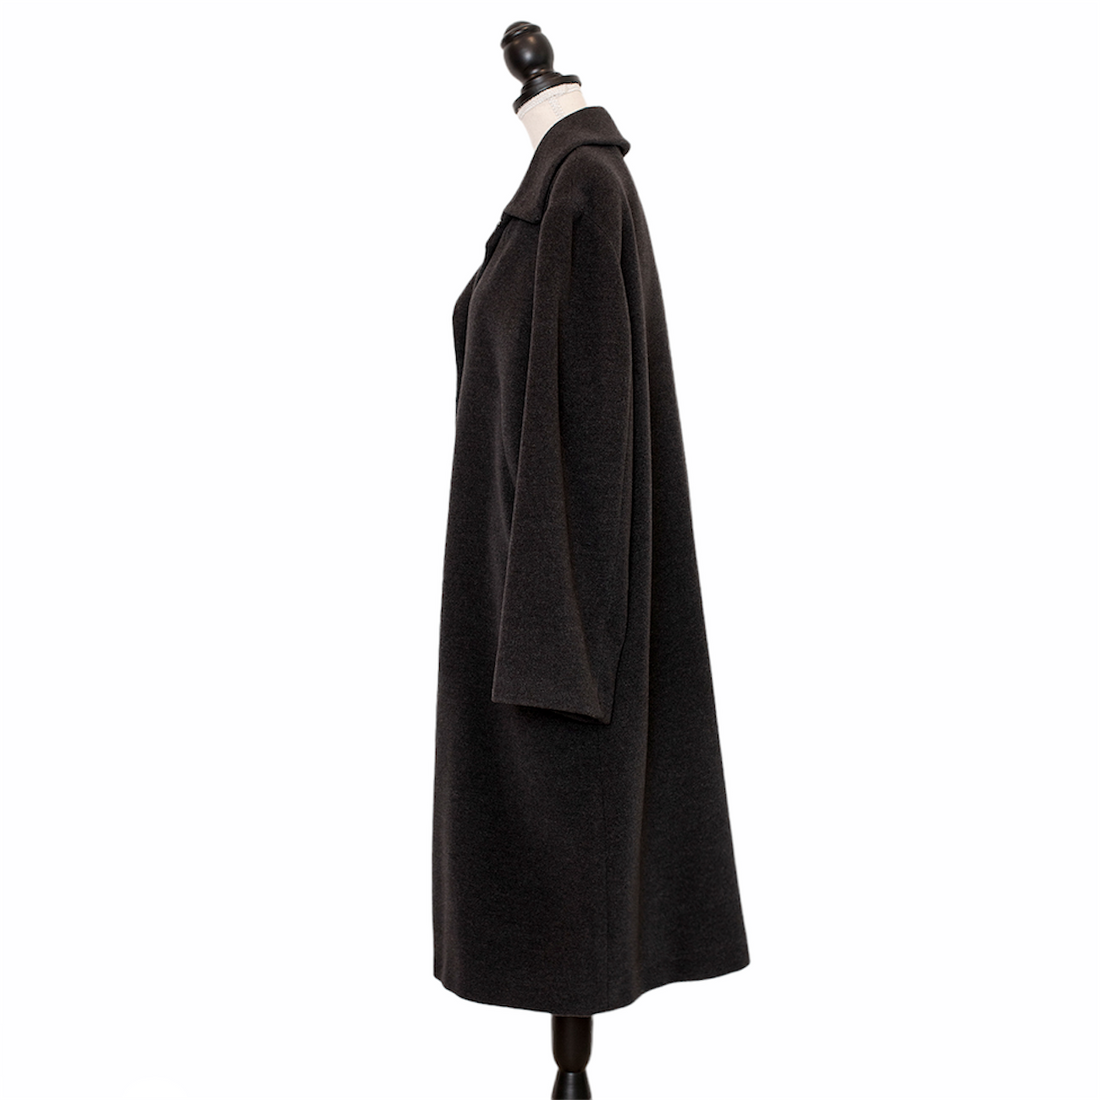 Bogner wool coat in an oversize style